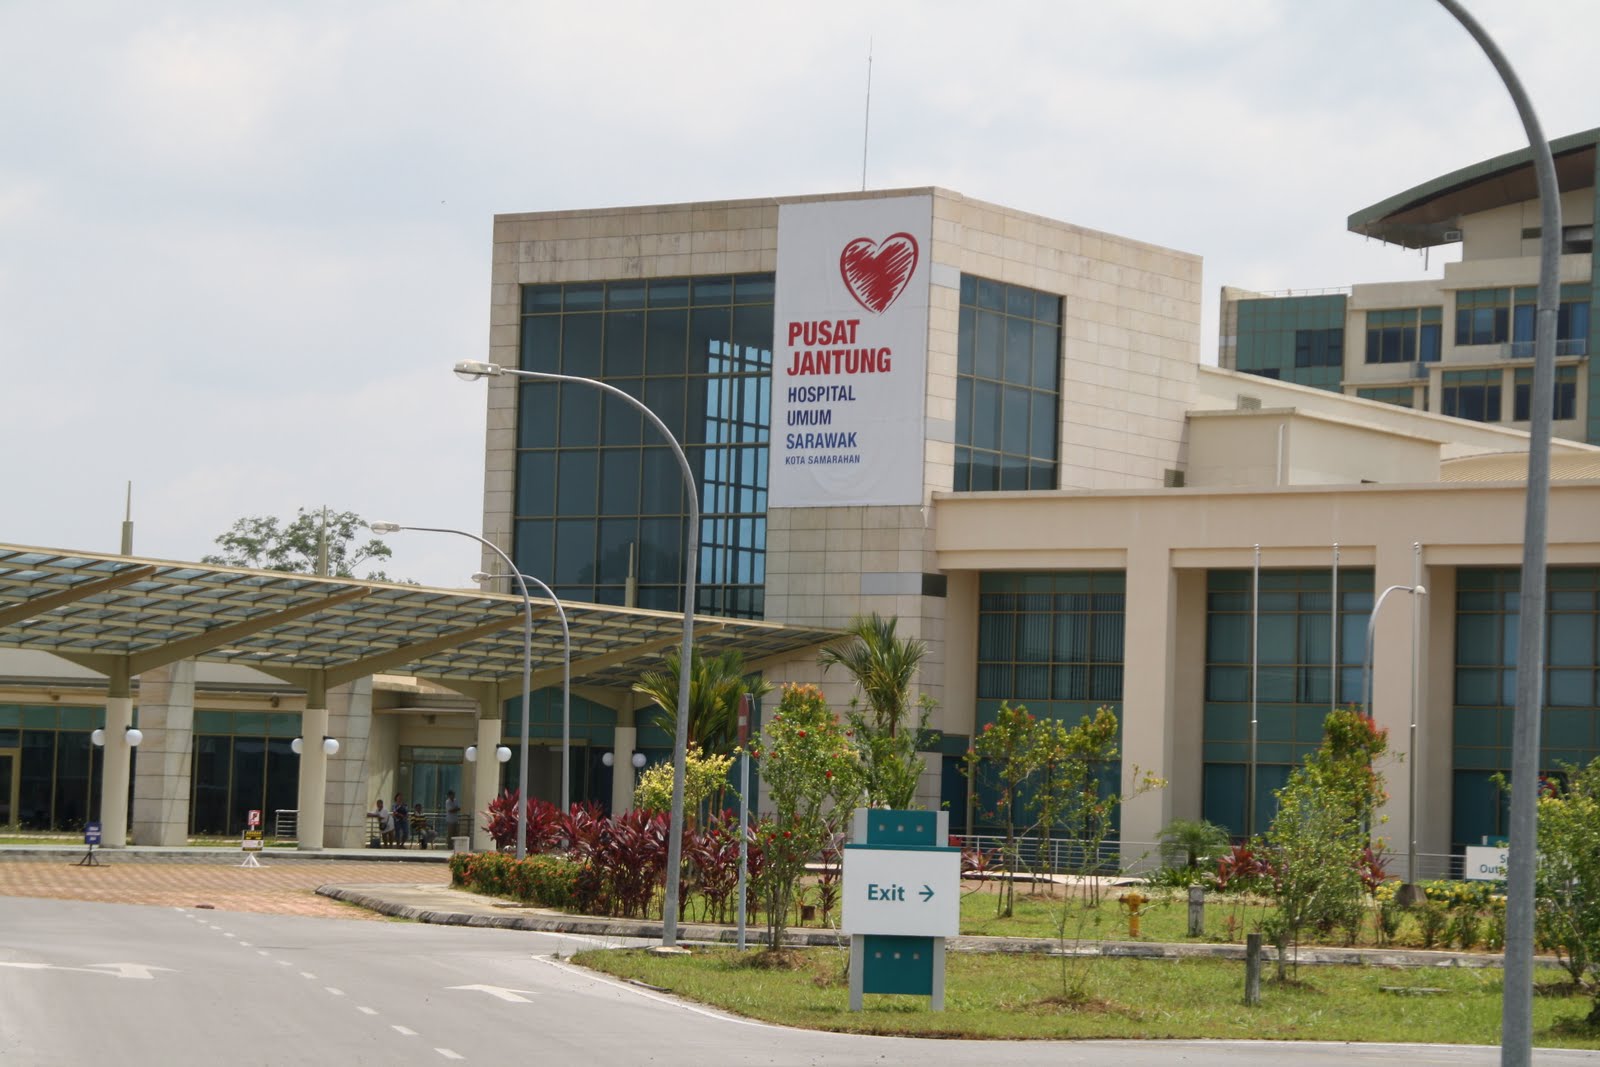 Kita Tak Peduli Pusat Jantung Hospital Umum Sarawak